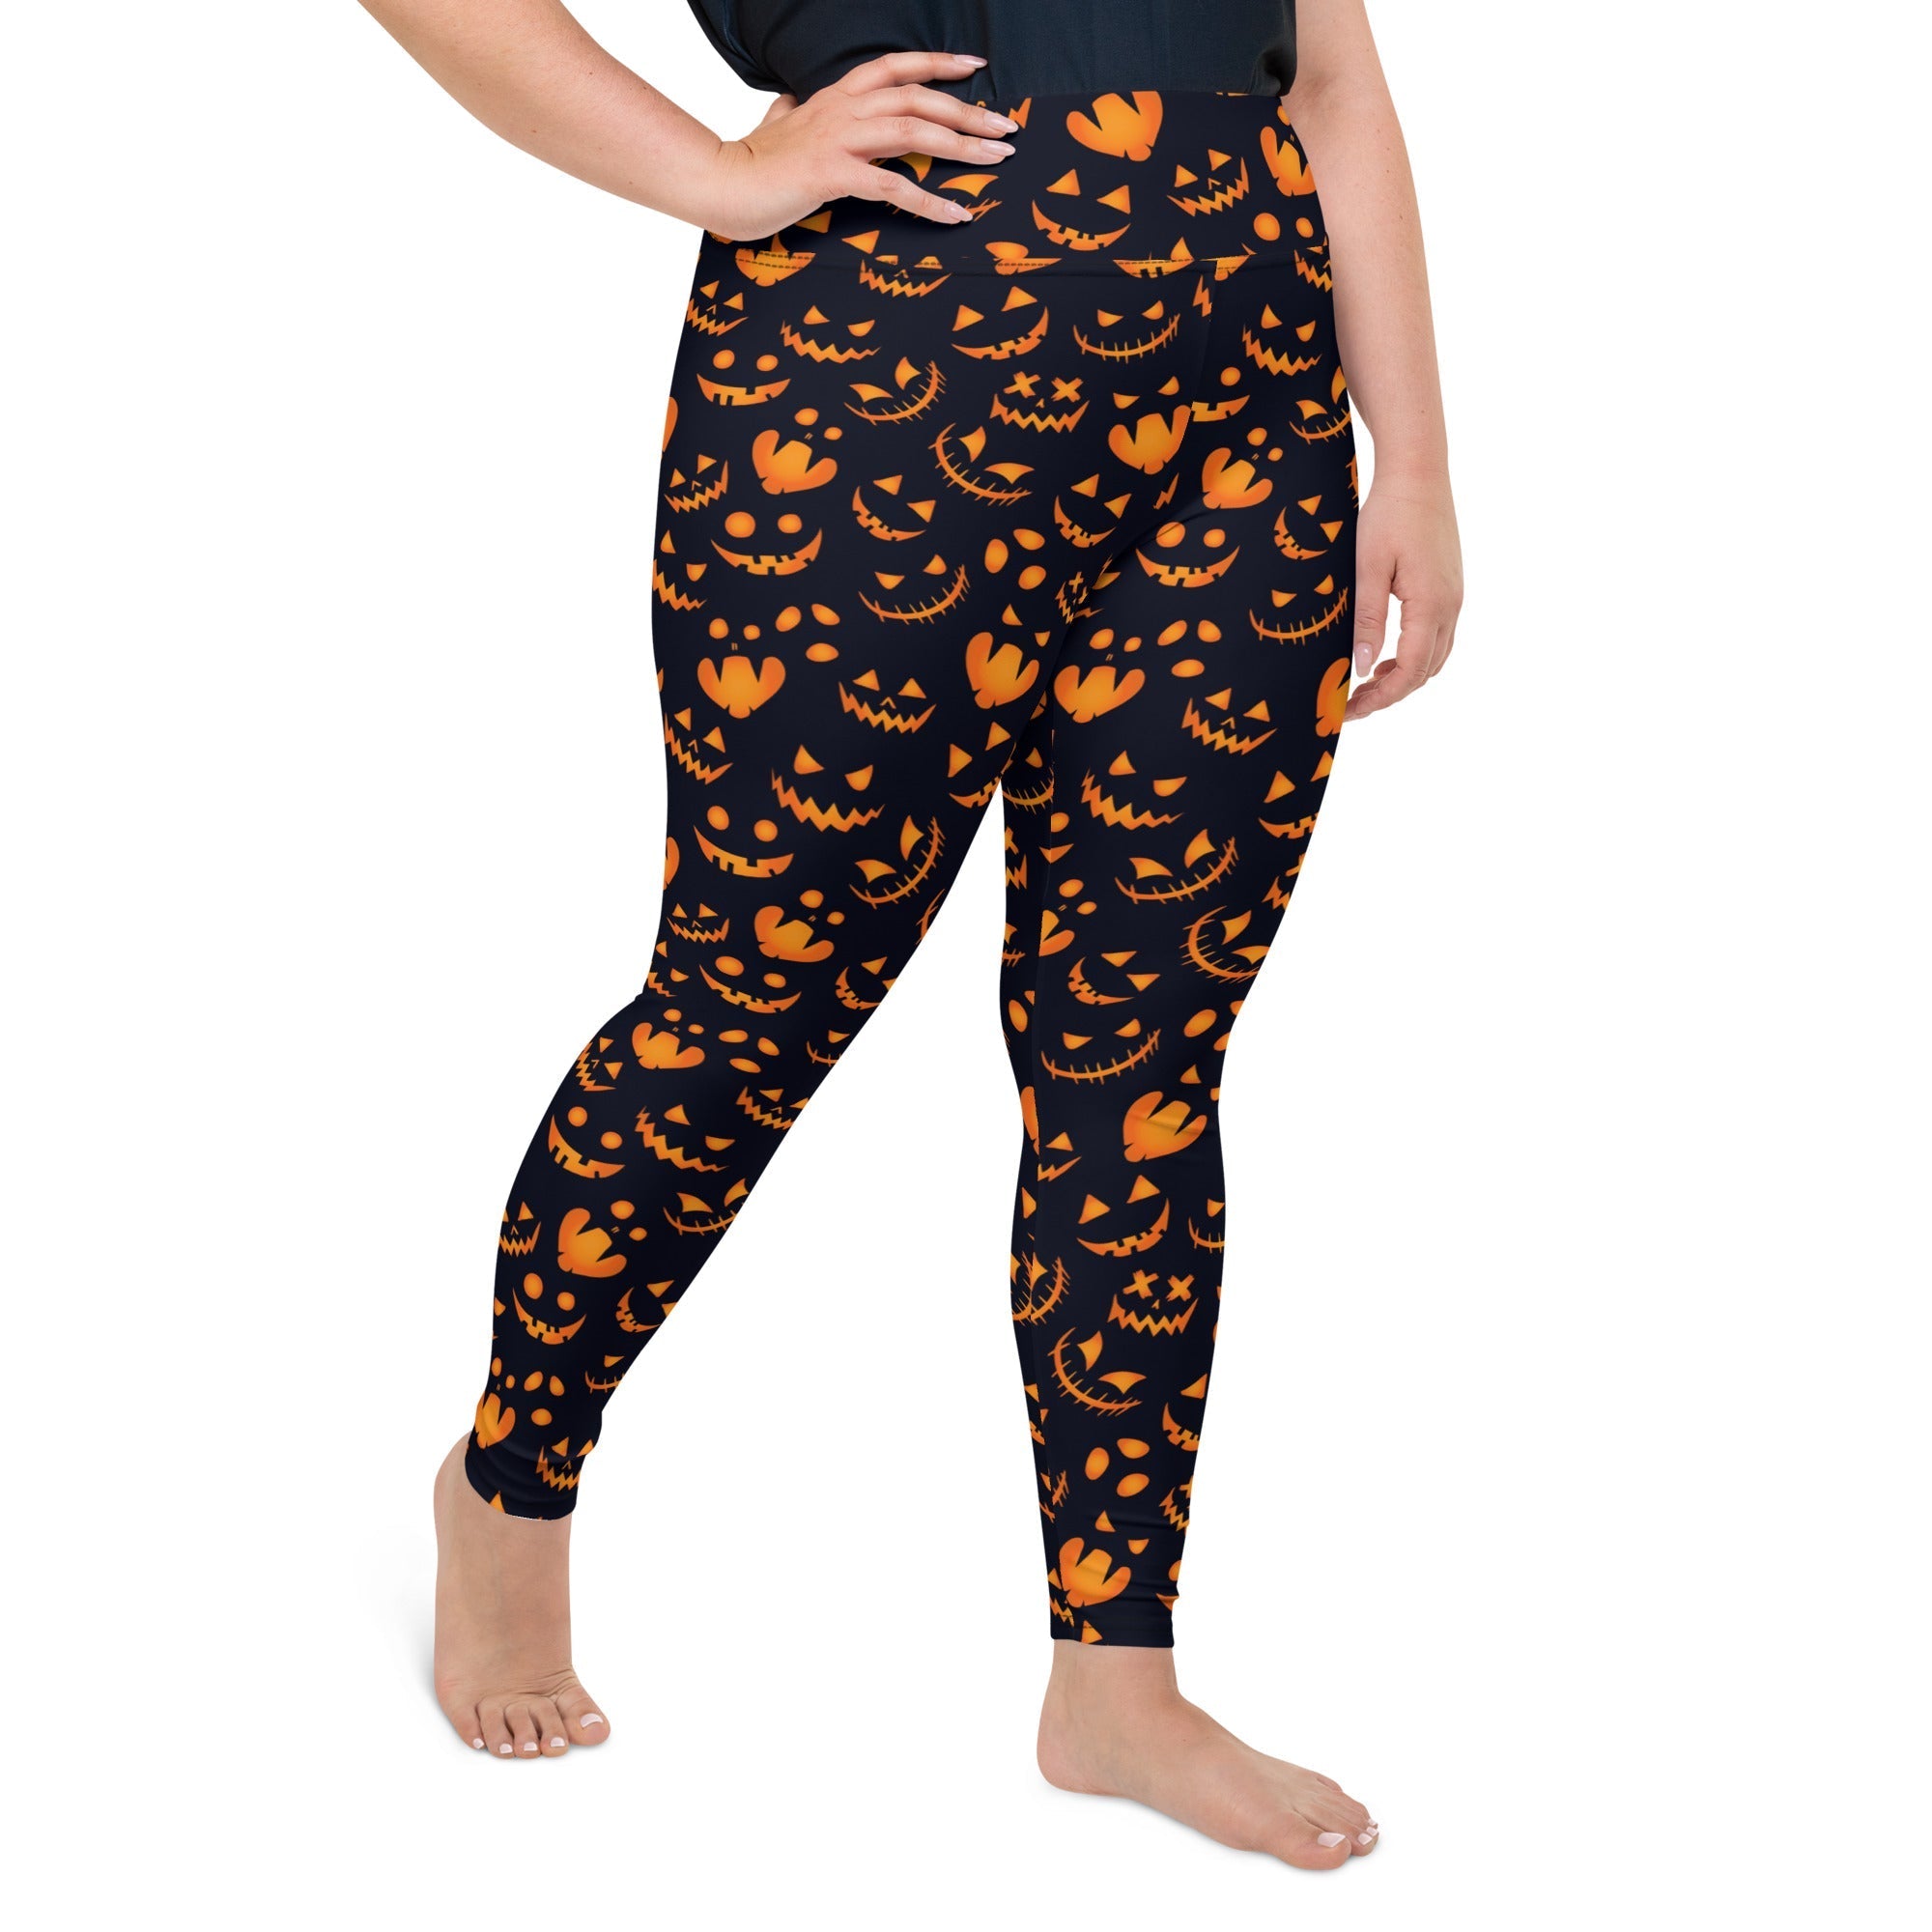 Spooktacular Halloween Plus Size Leggings: Women's Halloween Outfits